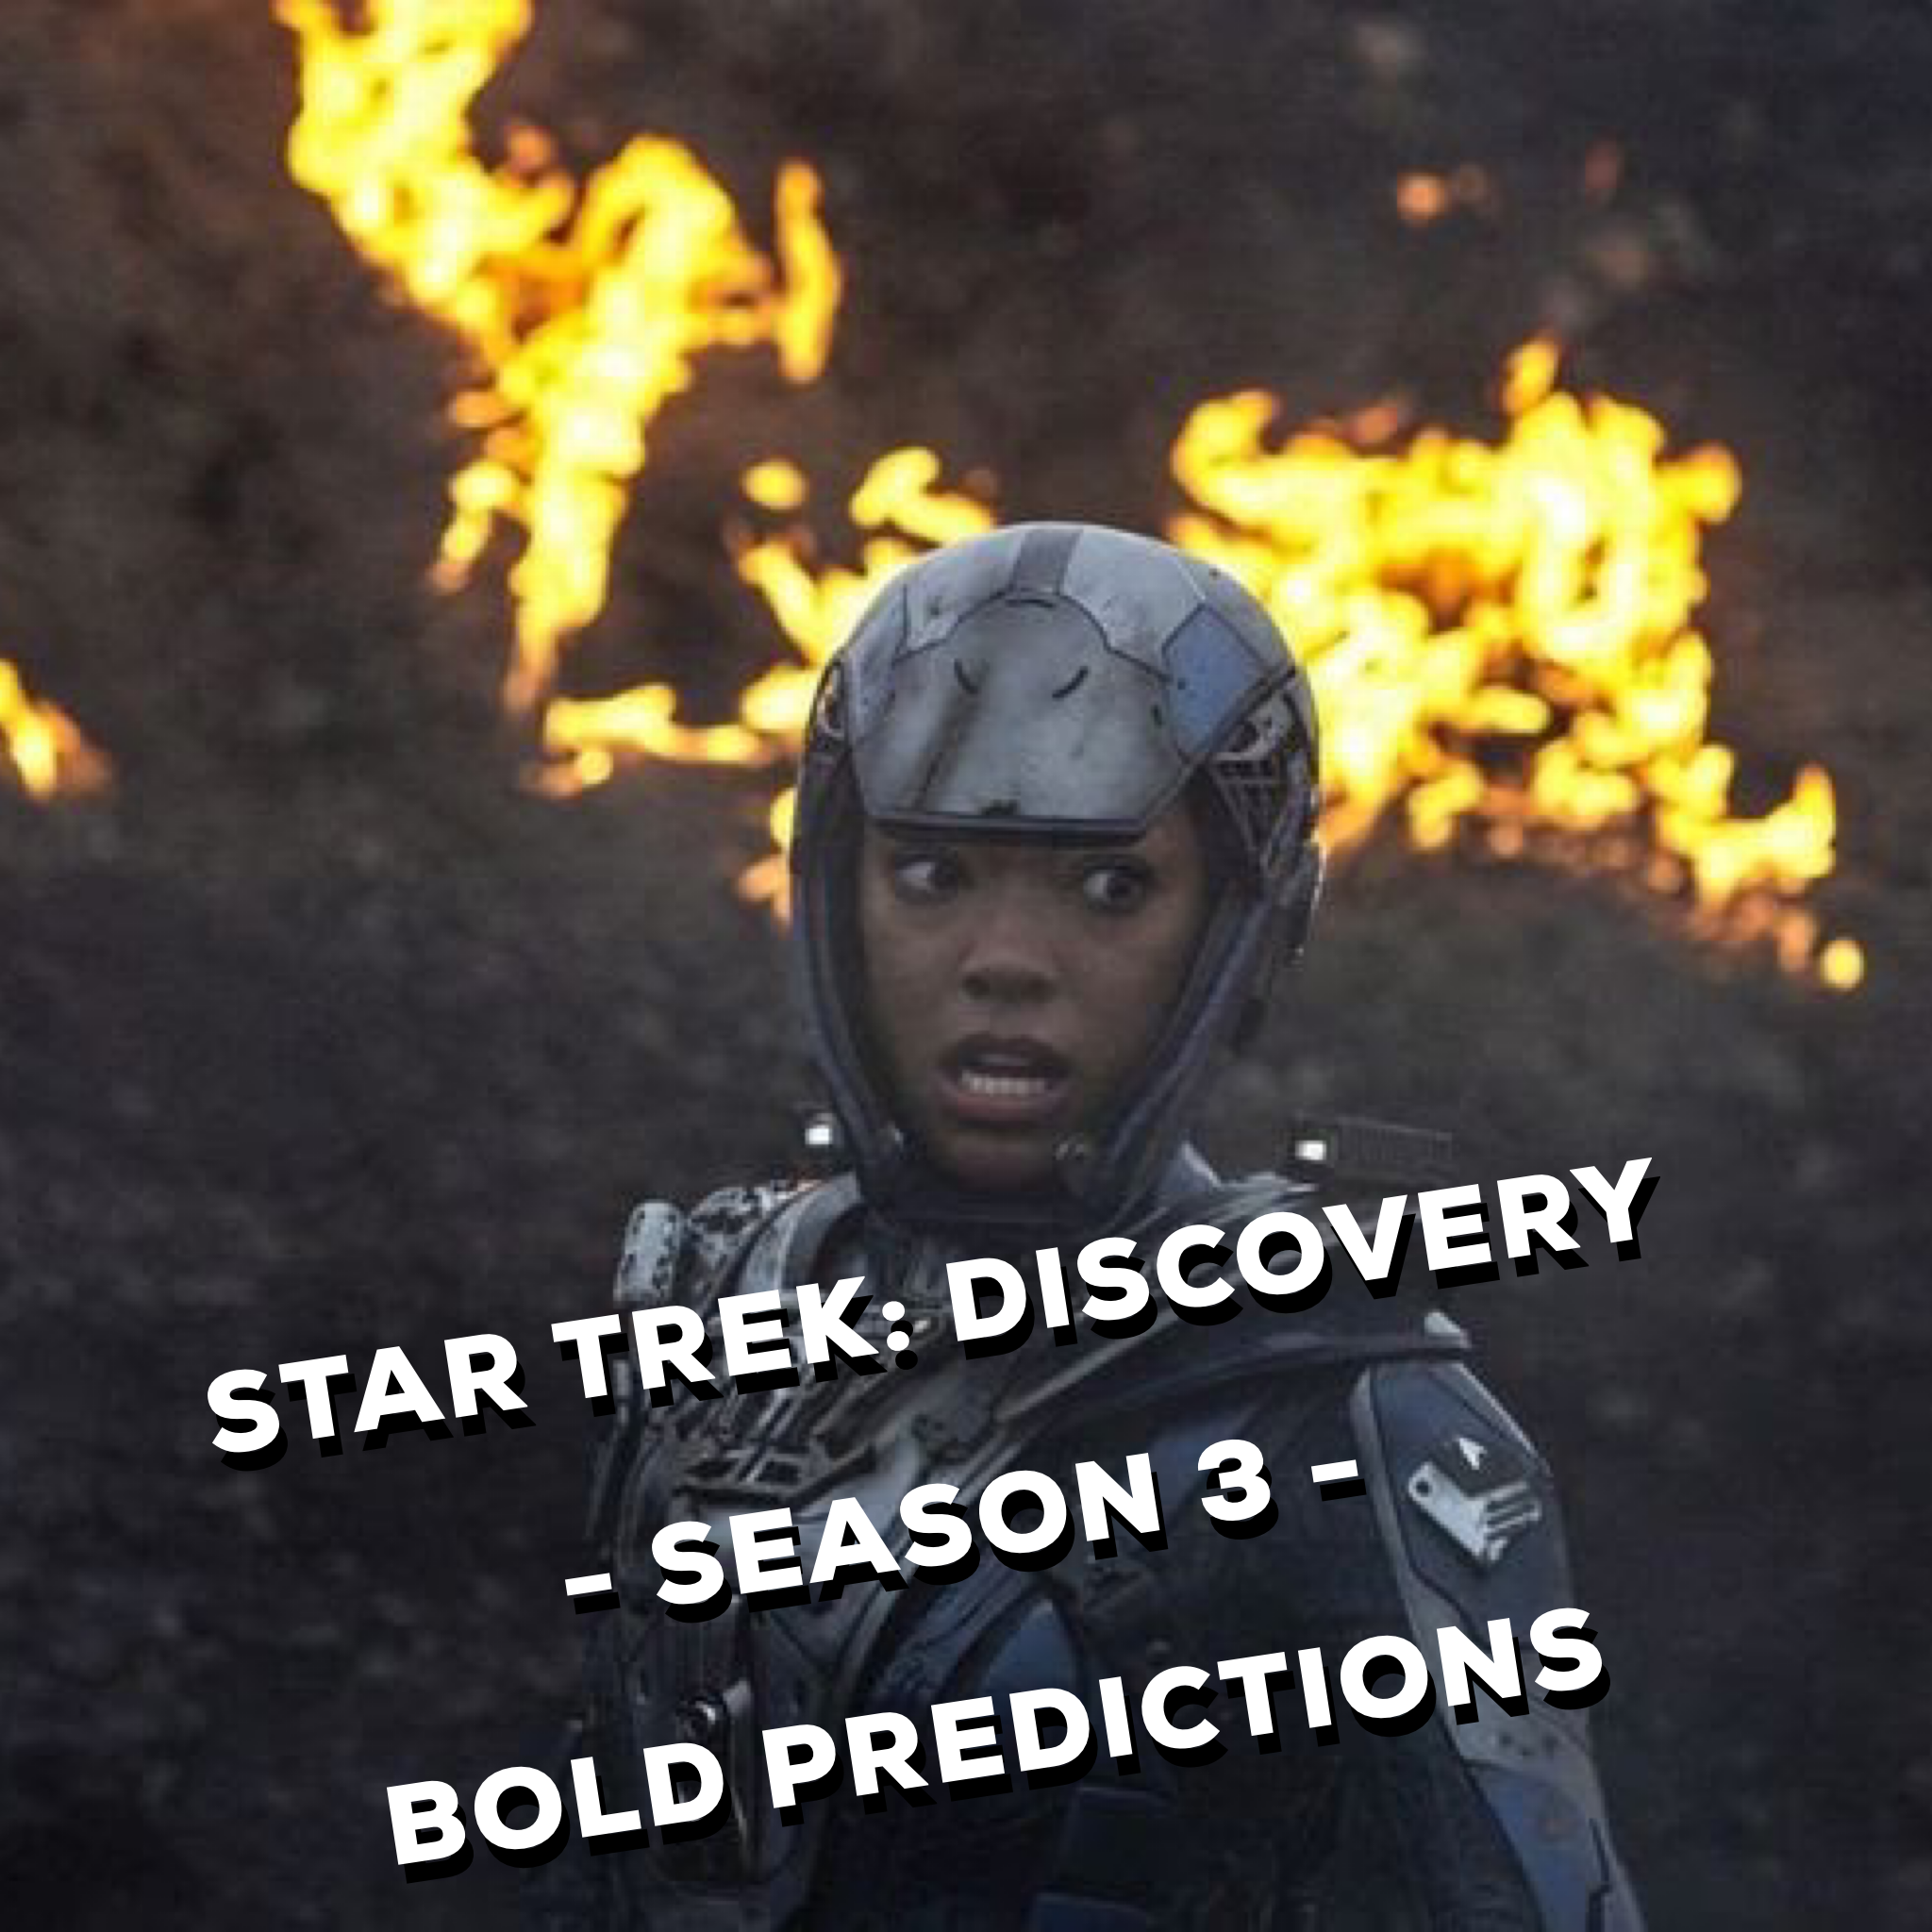 Star Trek: Discovery Season 3 Bold Predictions